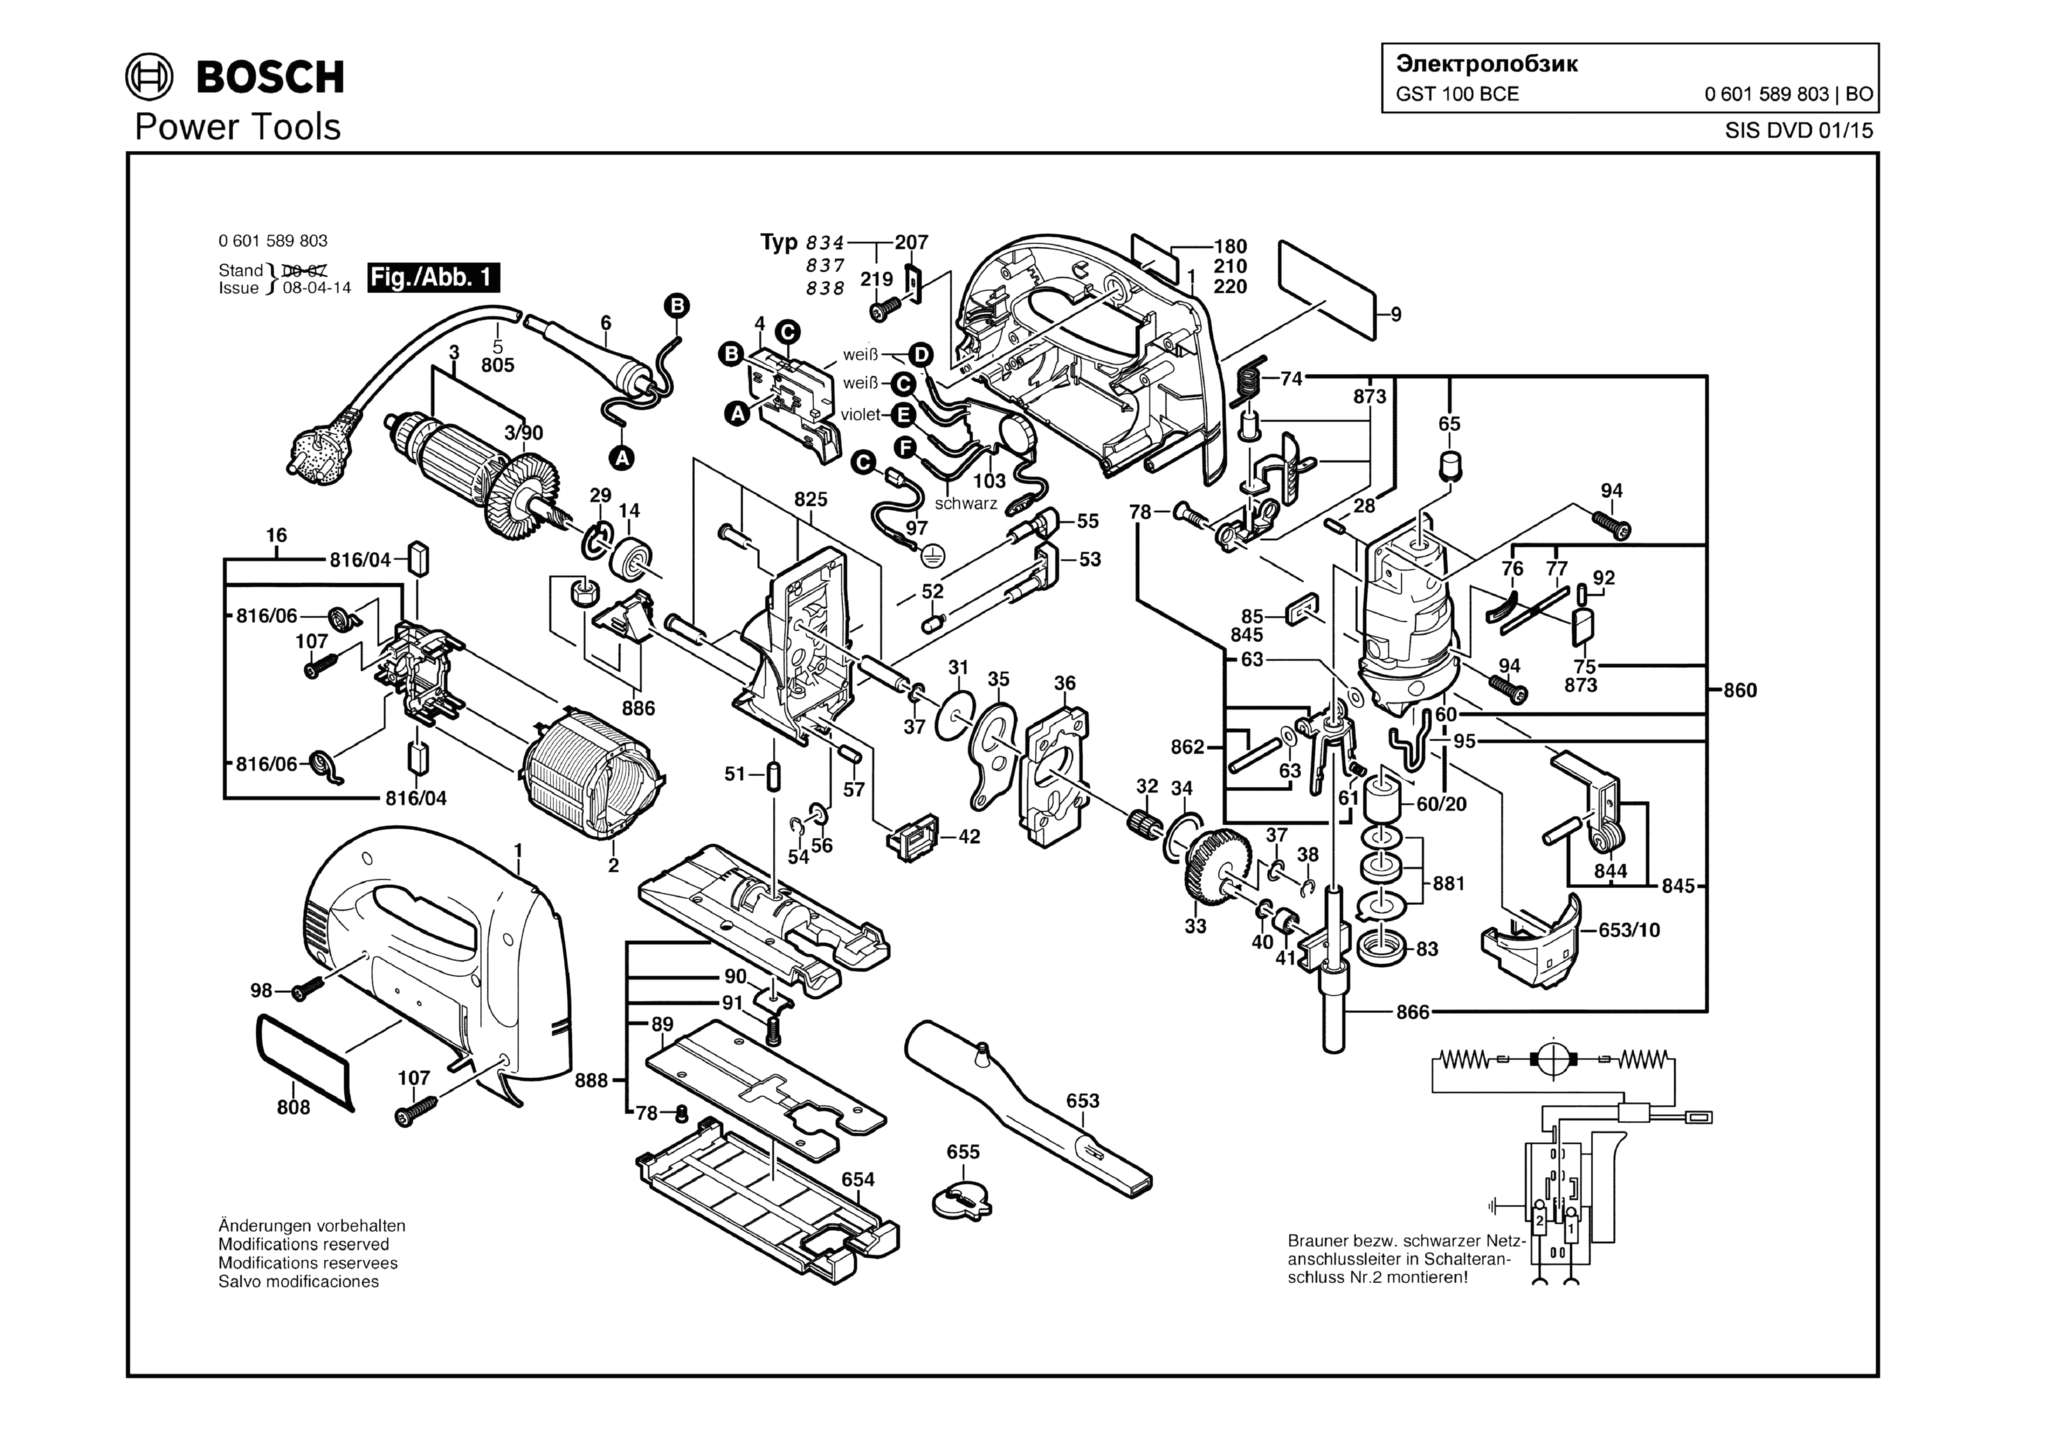 Запчасти, схема и деталировка Bosch GST 100 BCE (ТИП 0601589803)